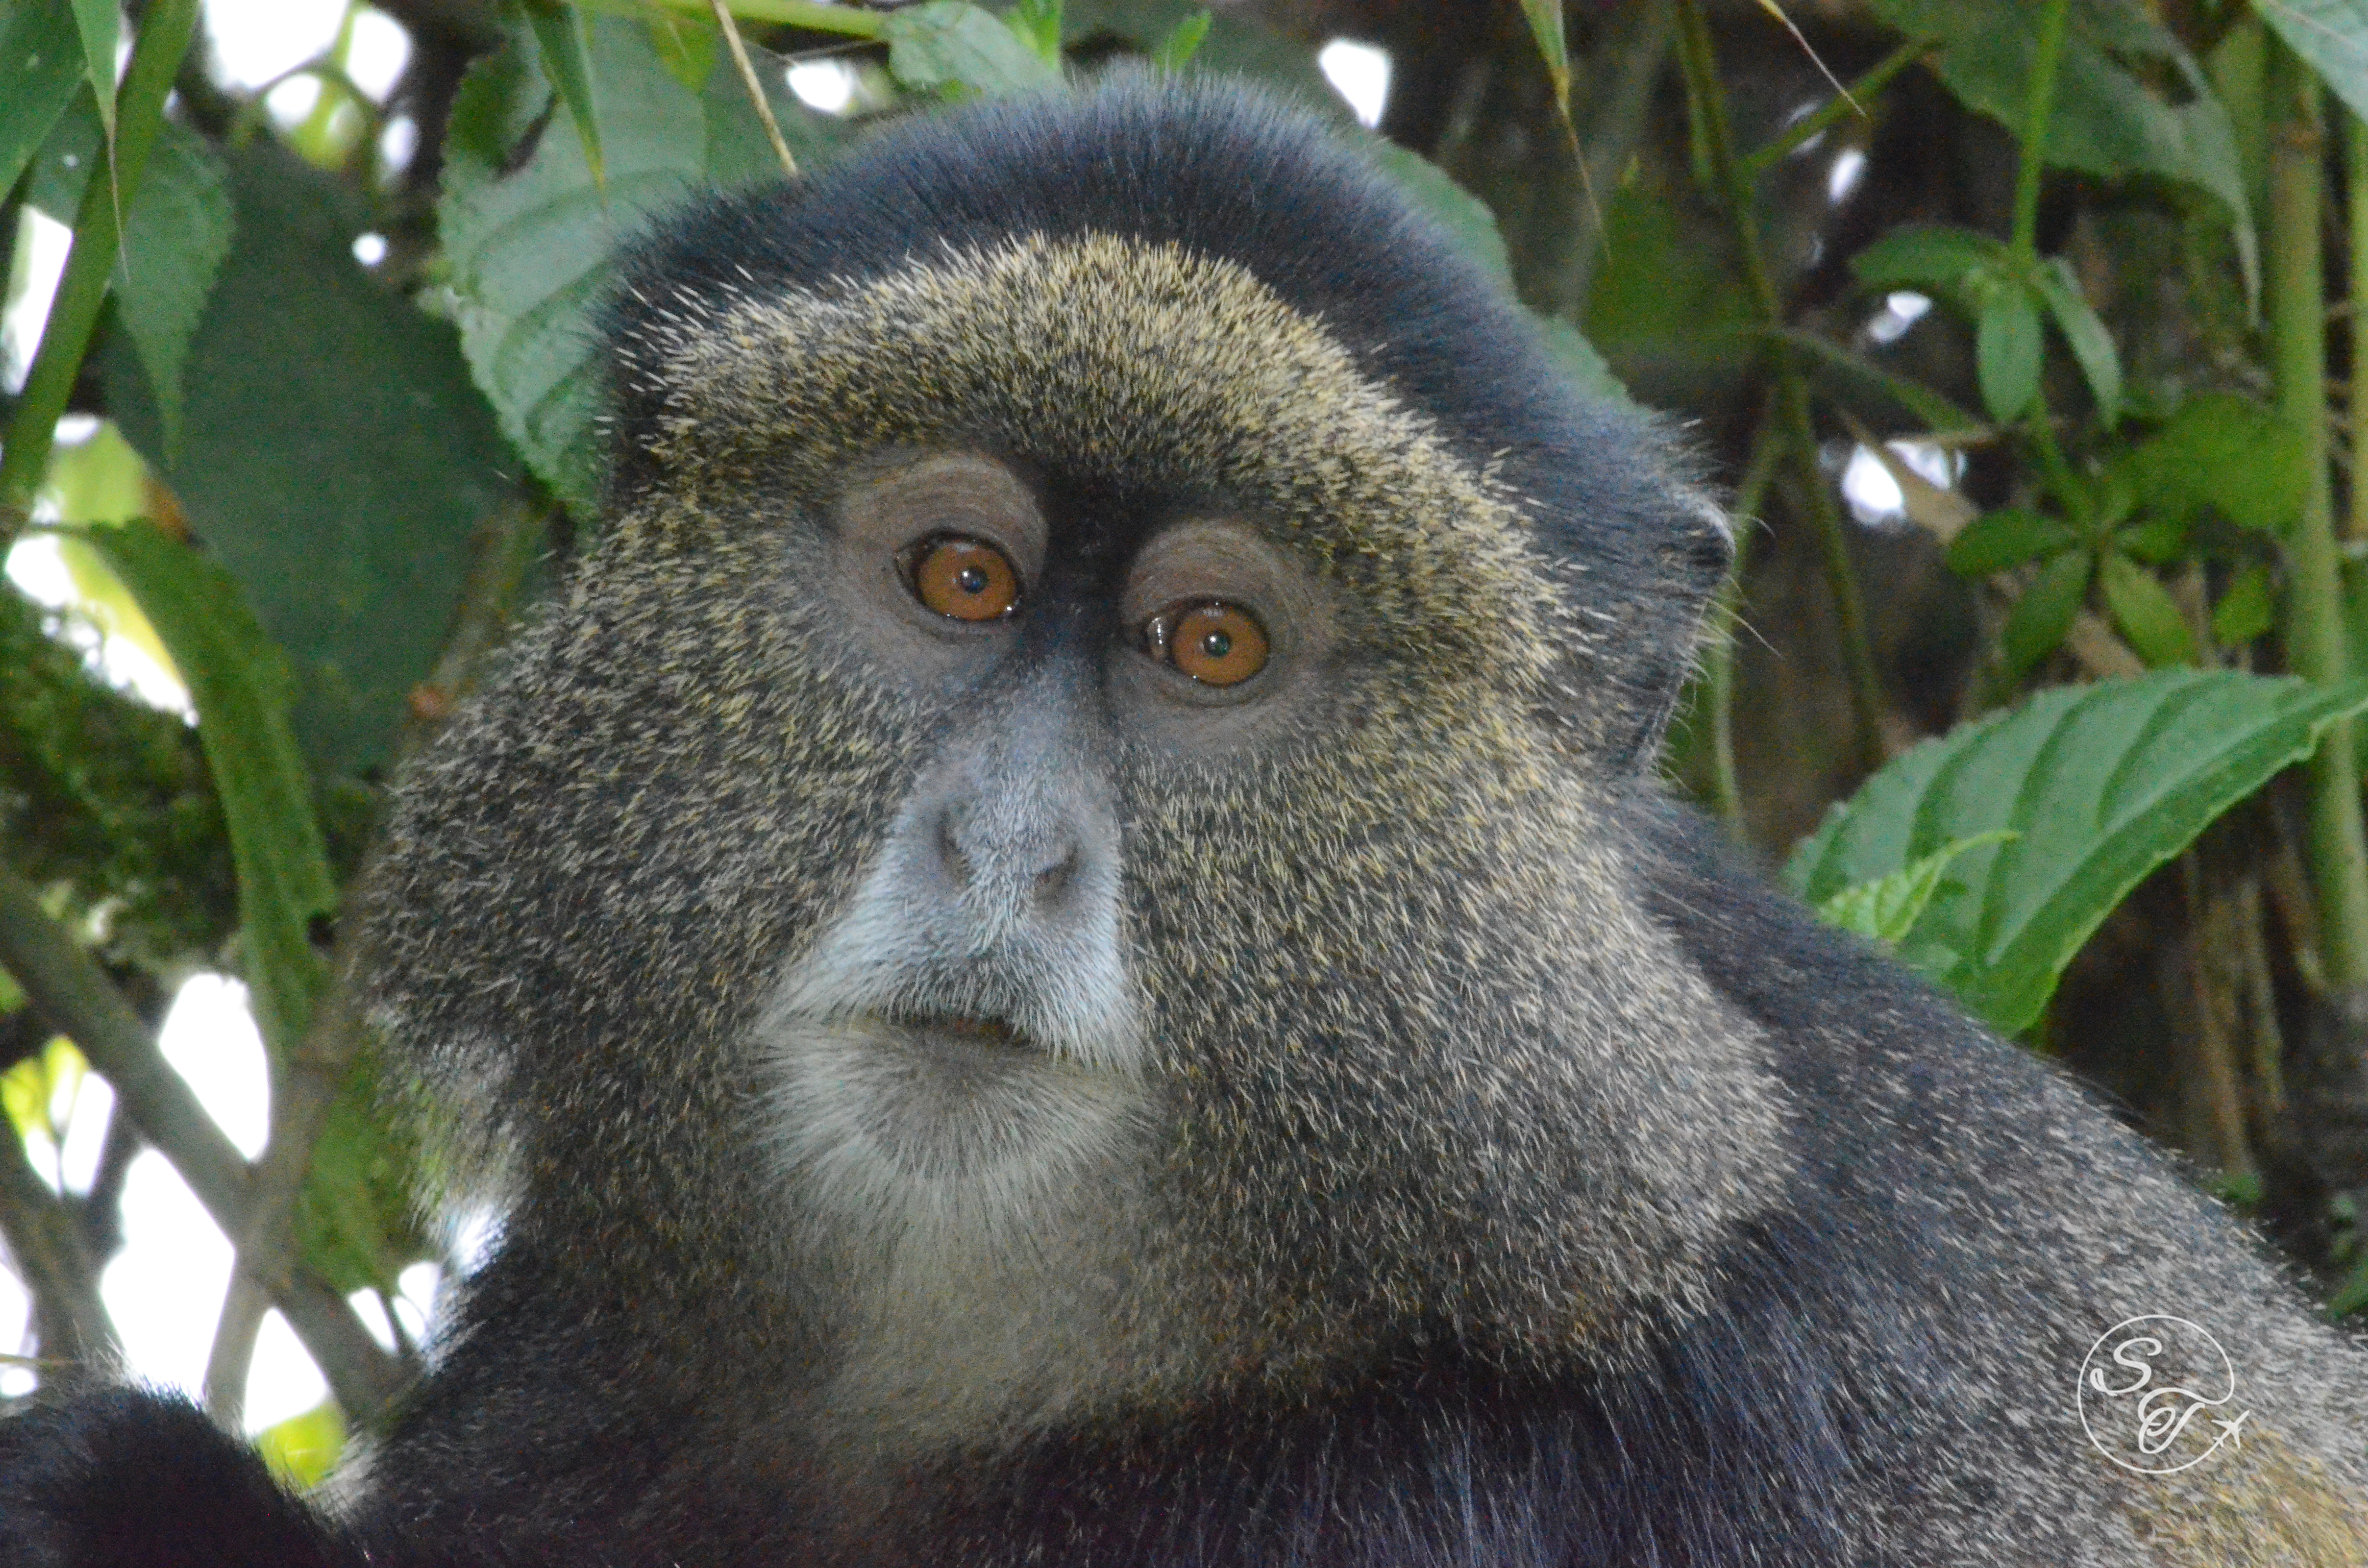 Trekkig with Rwanda's Golden Monkeys